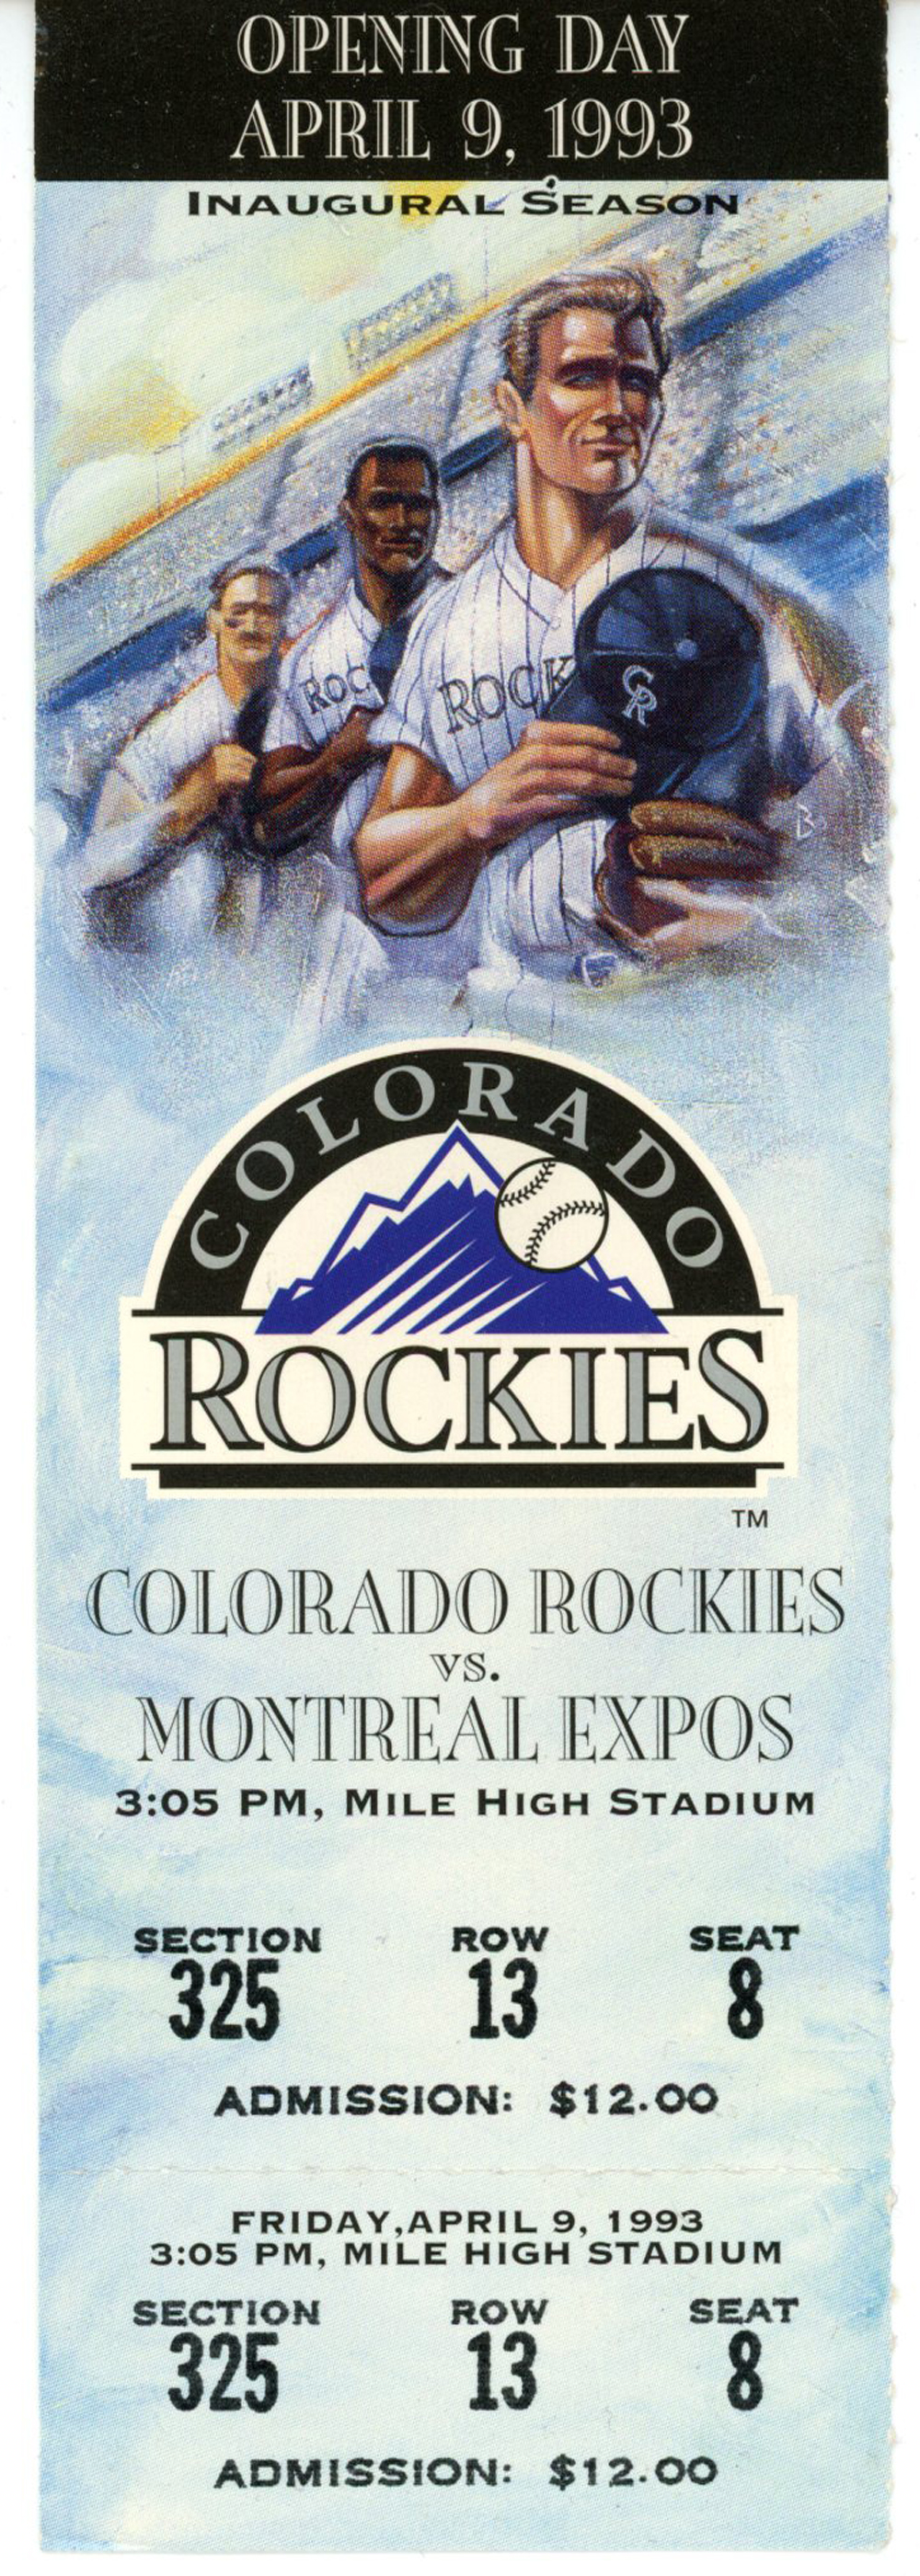 Colorado Rockies Opening Day April 9, 1993 Ticket Stub